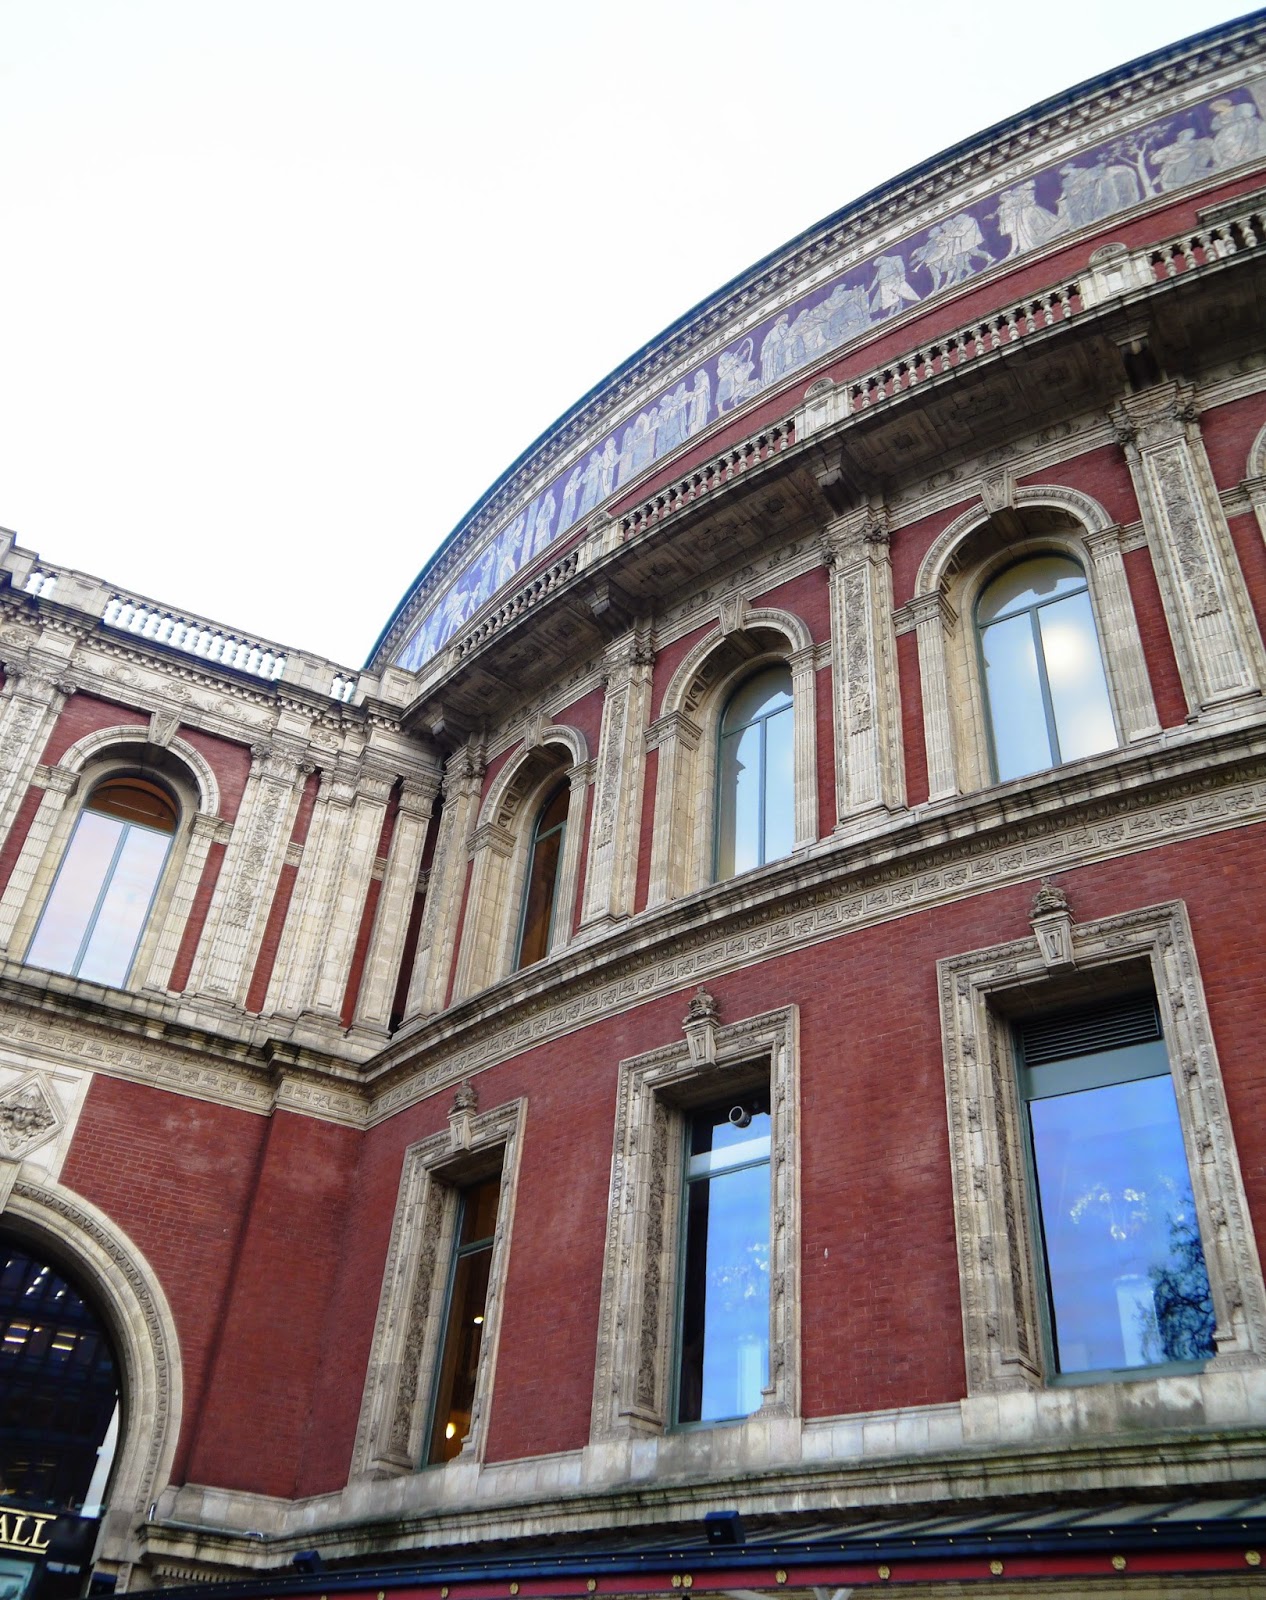 Royal Albert Hall outside